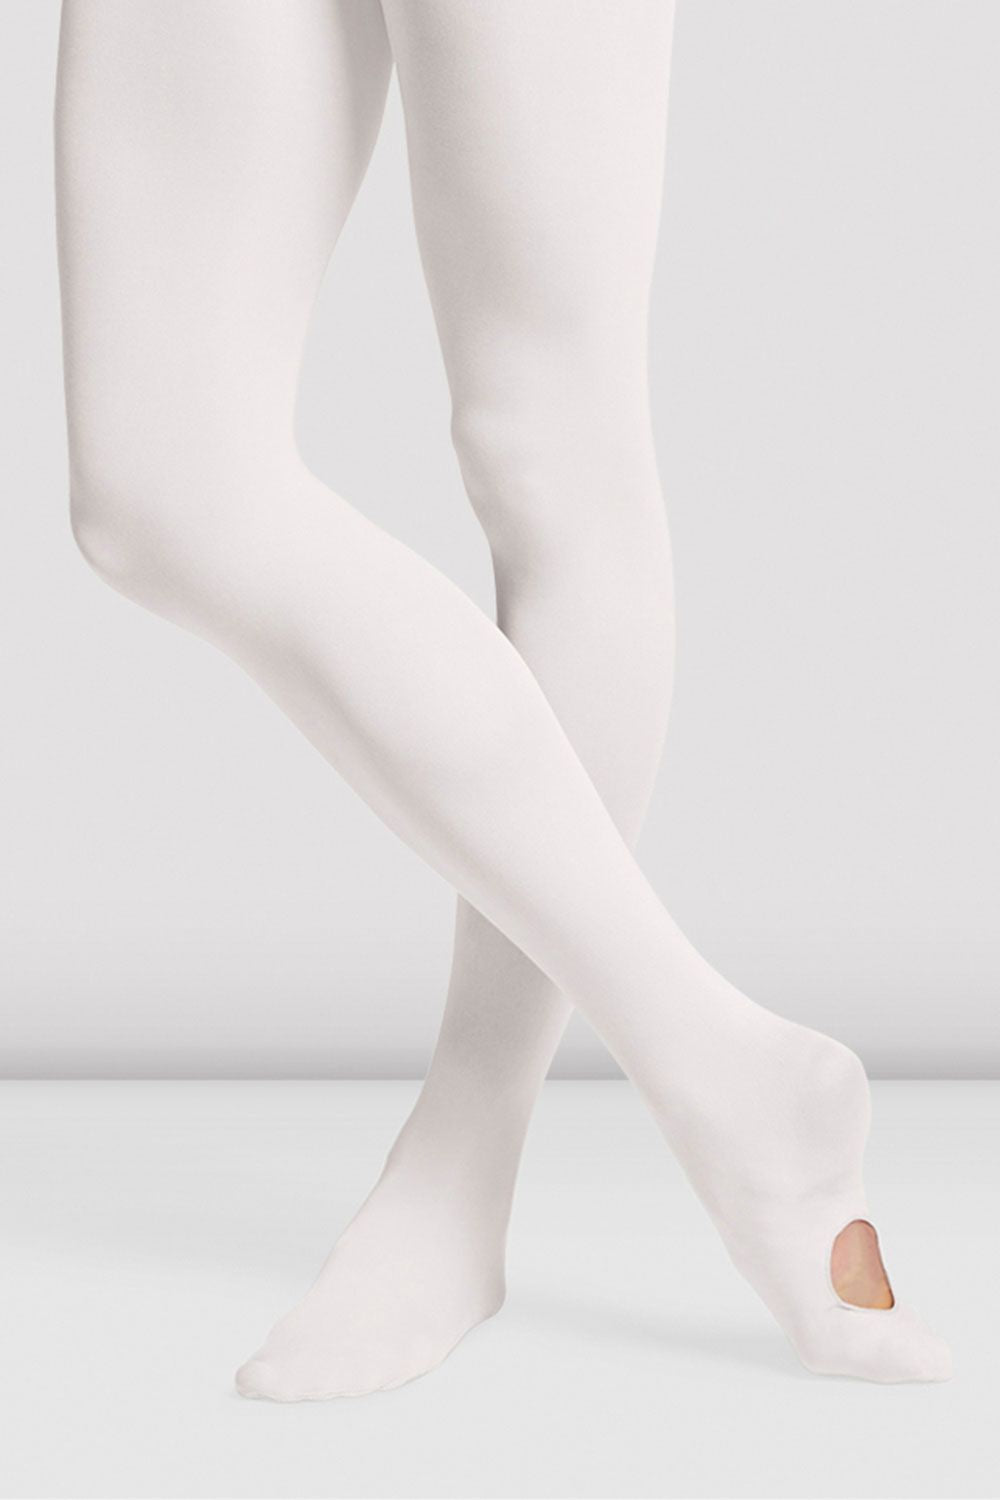 Ladies Convertible Tights, White – BLOCH Dance UK